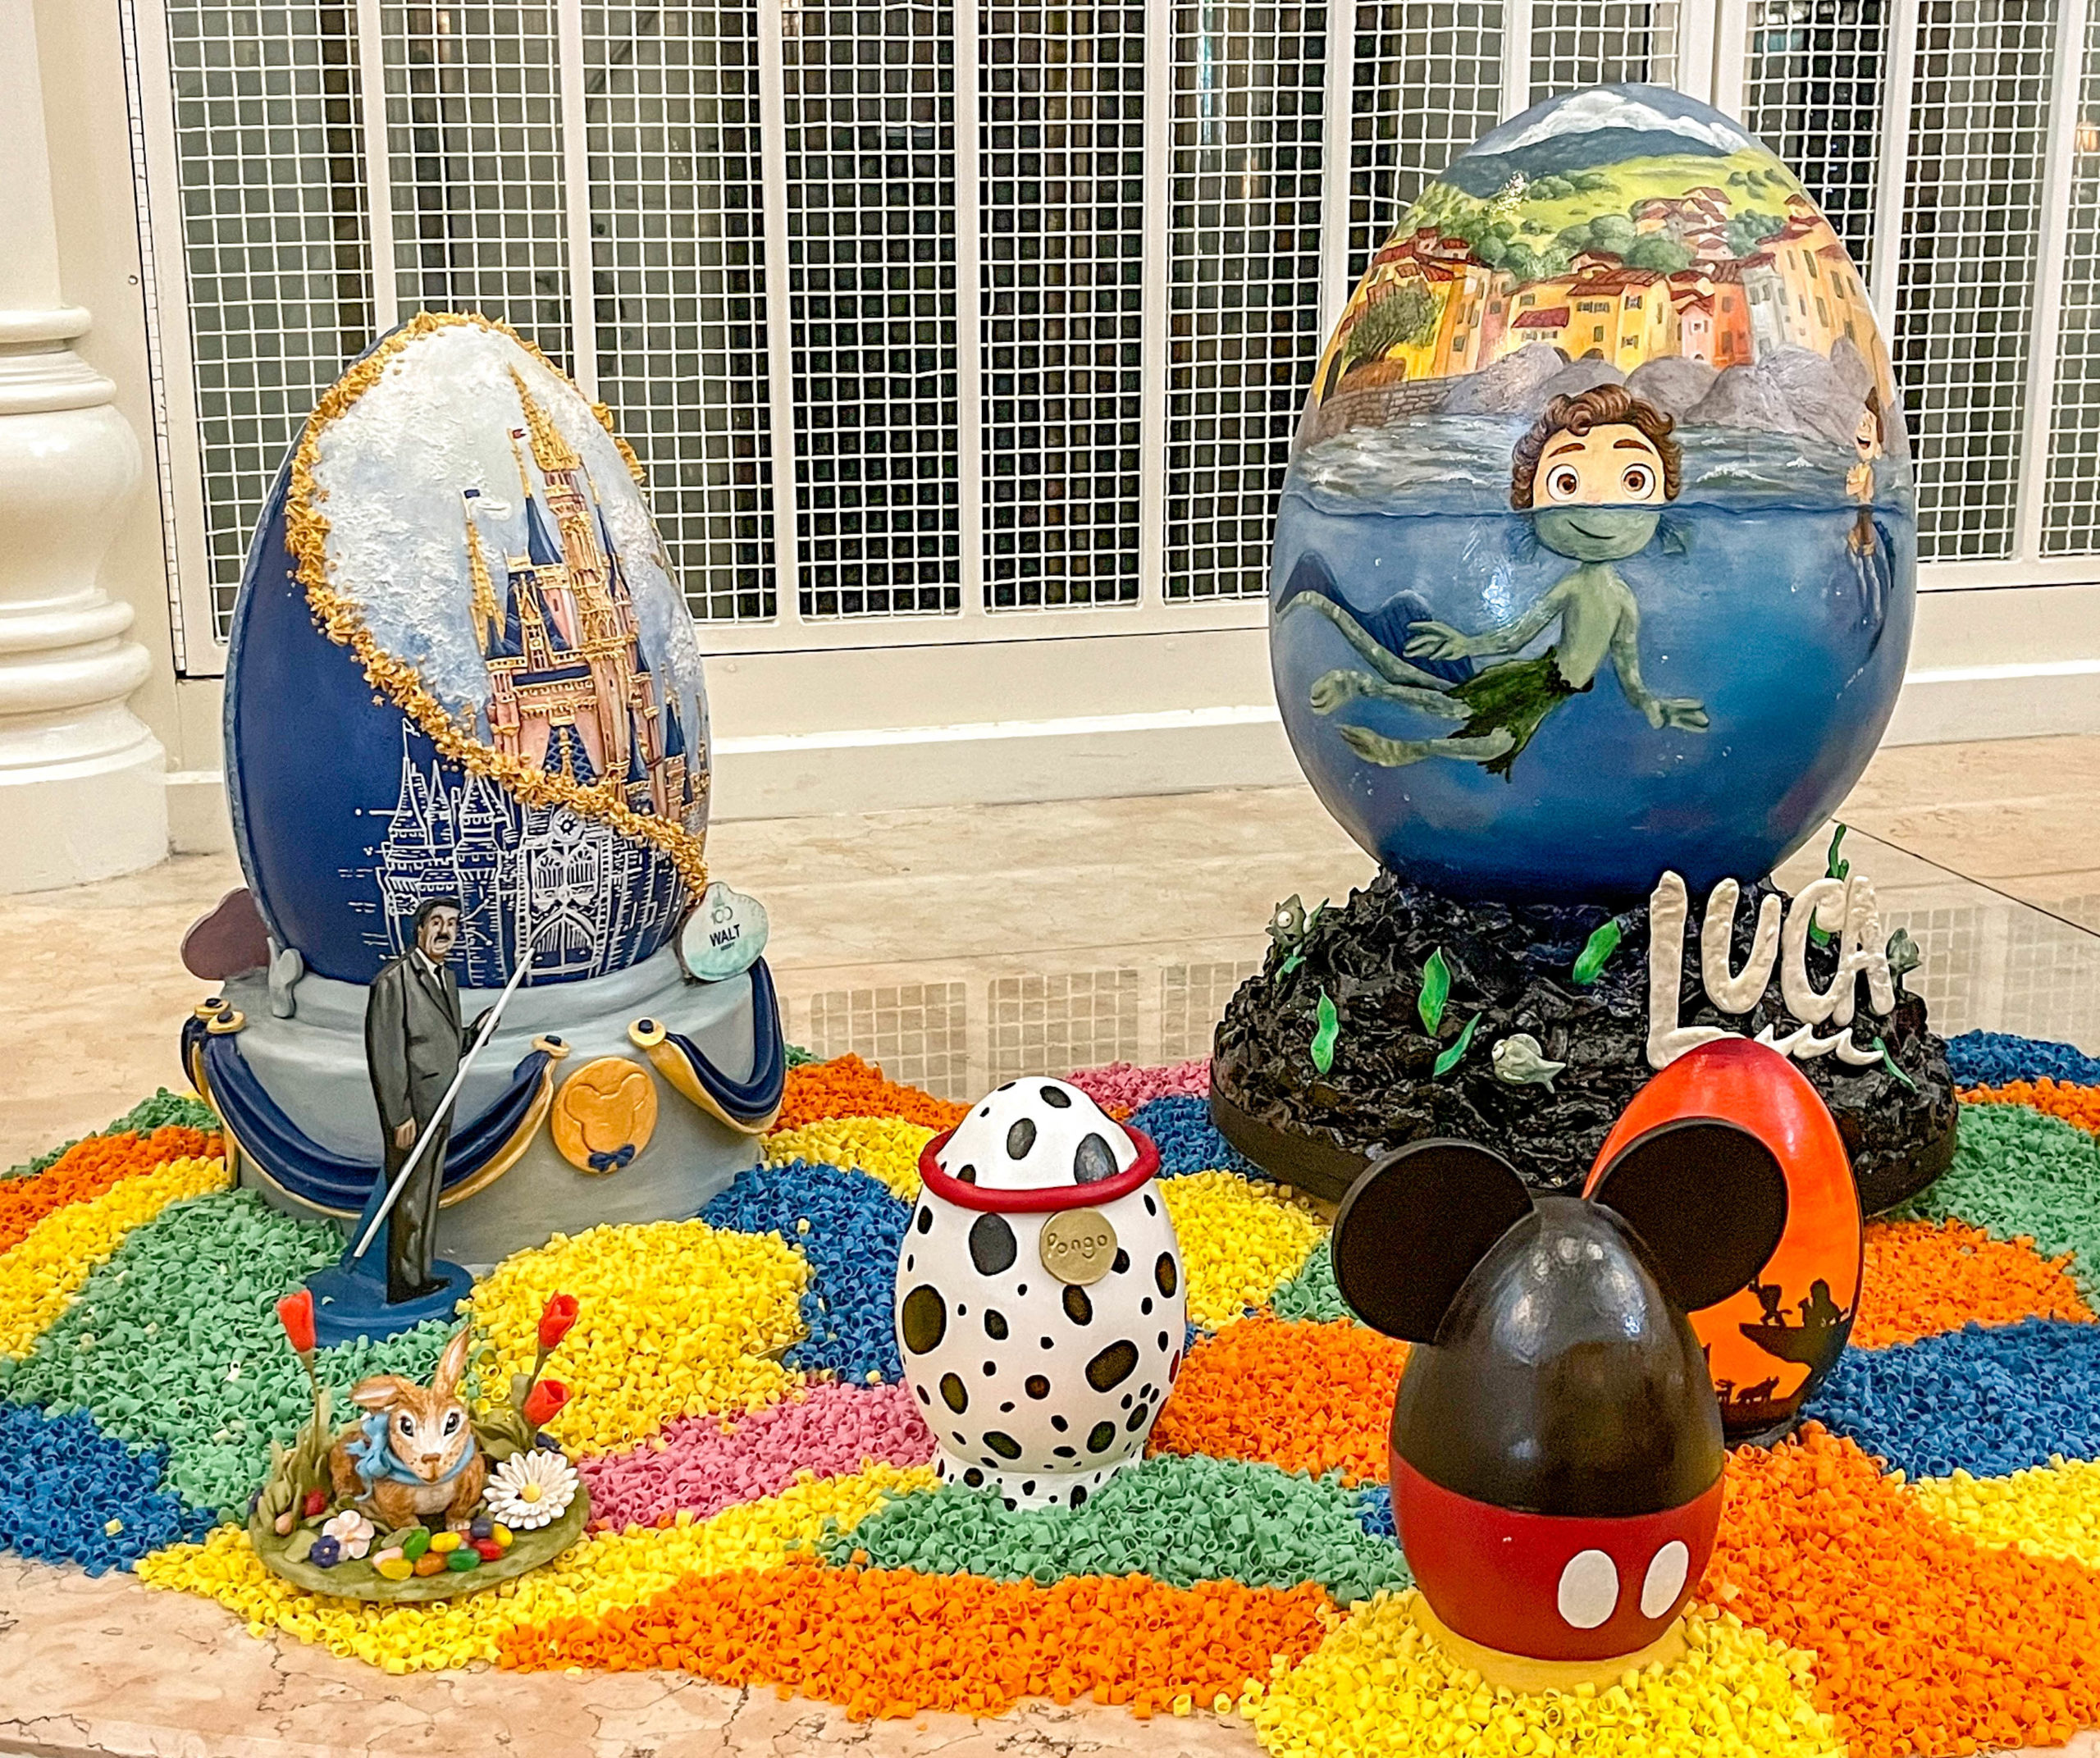 Eggs on display in Disney's Grand Floridian Resort